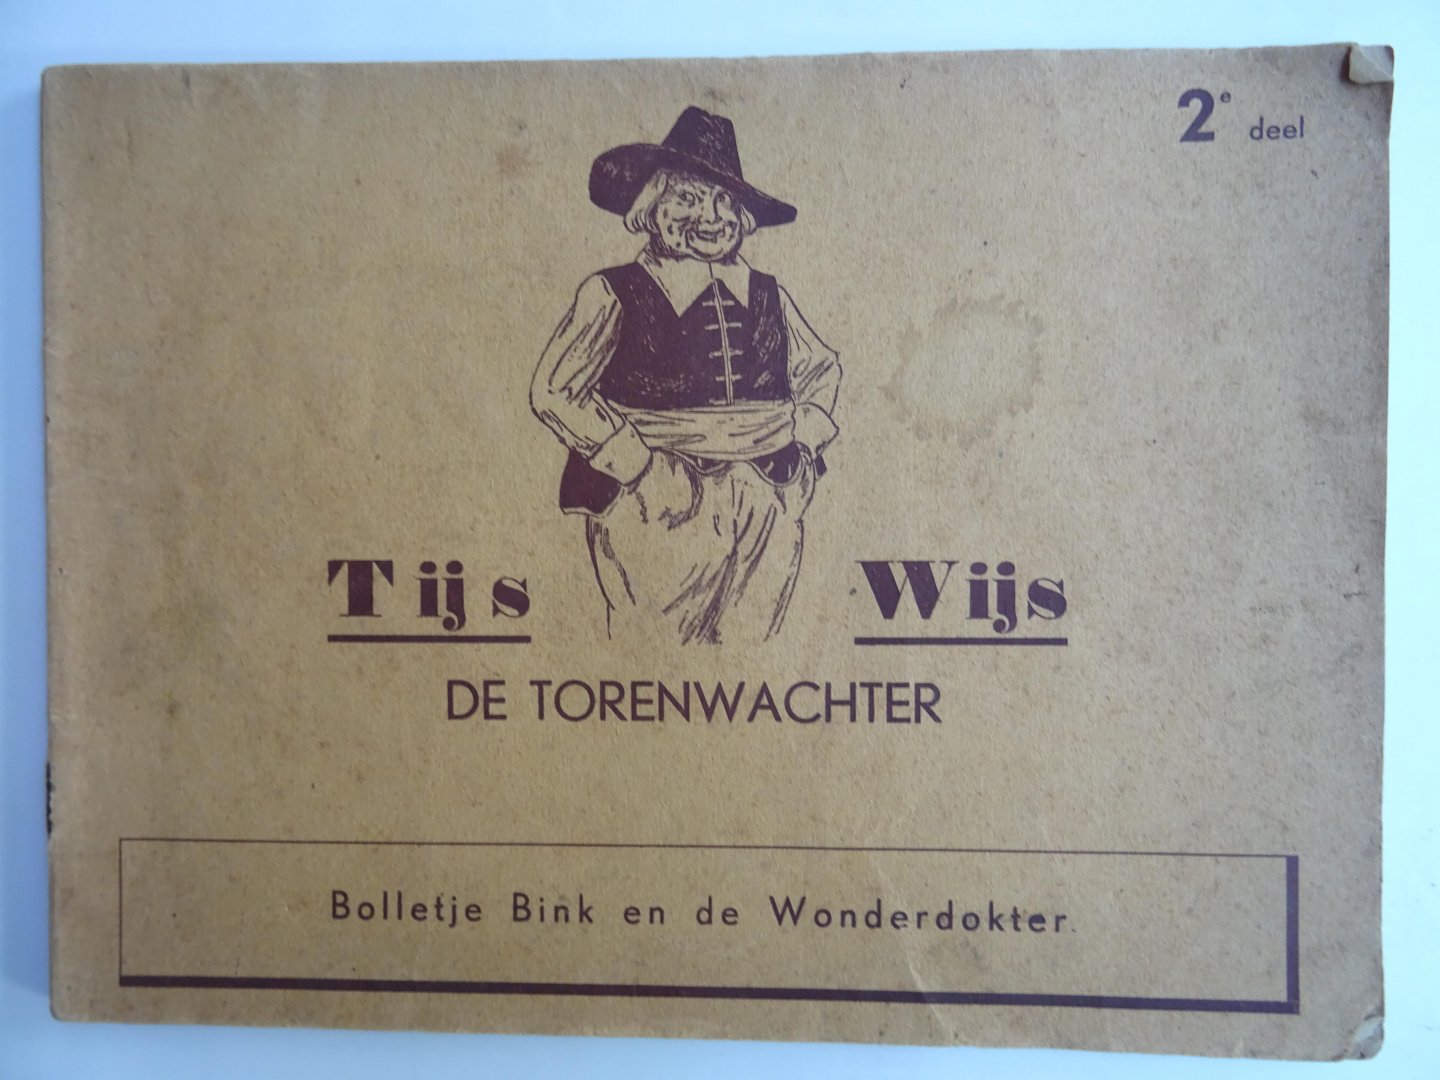  - Tijs Wijs De torenwachter. 2e deel: Bolletje Bink en de Wonderdokter.